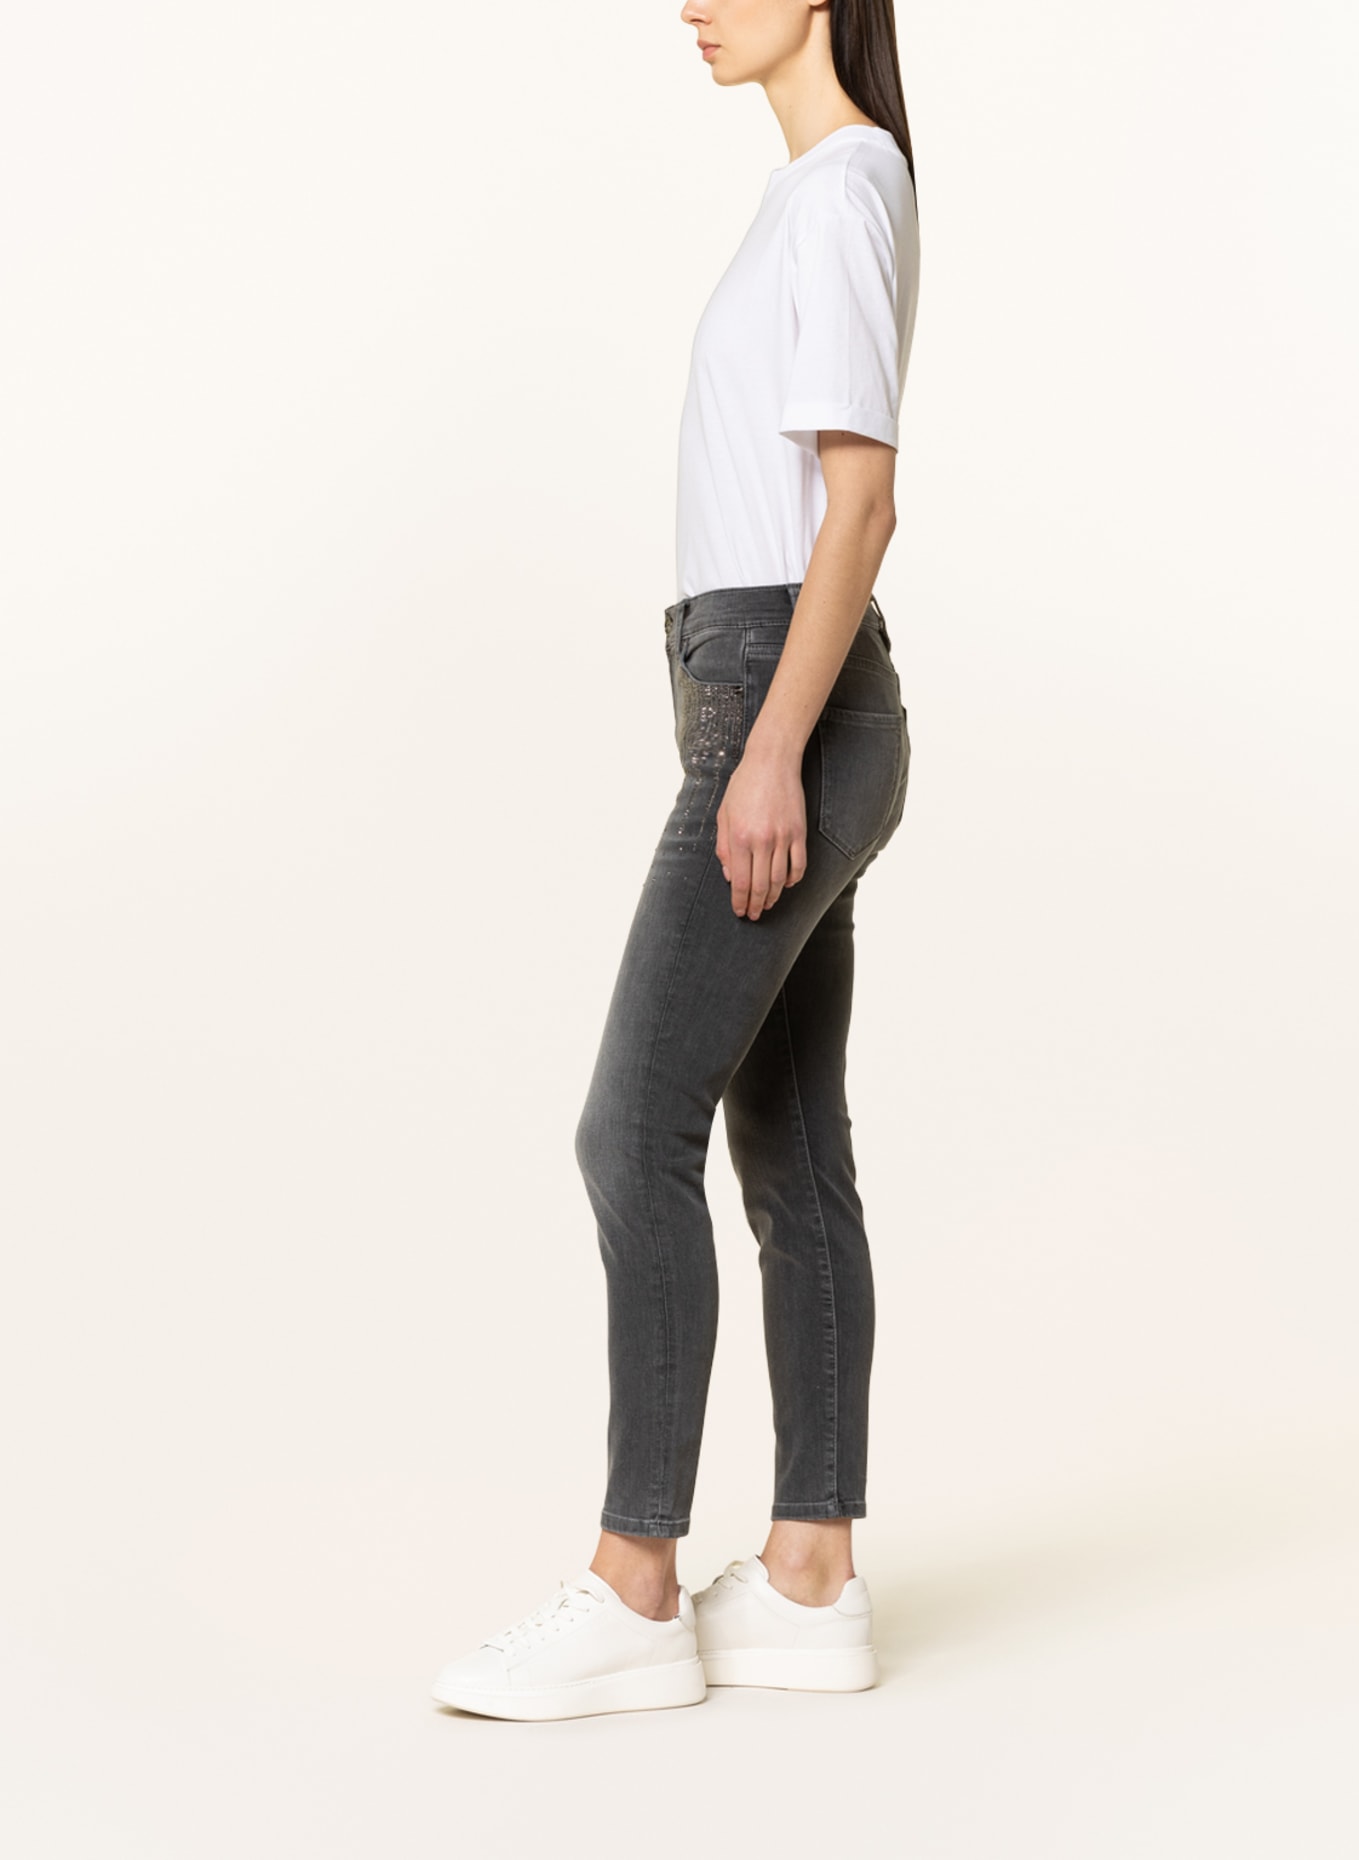 JOOP! Skinny jeans with decorative gems, Color: 030 Medium Grey                030 (Image 4)